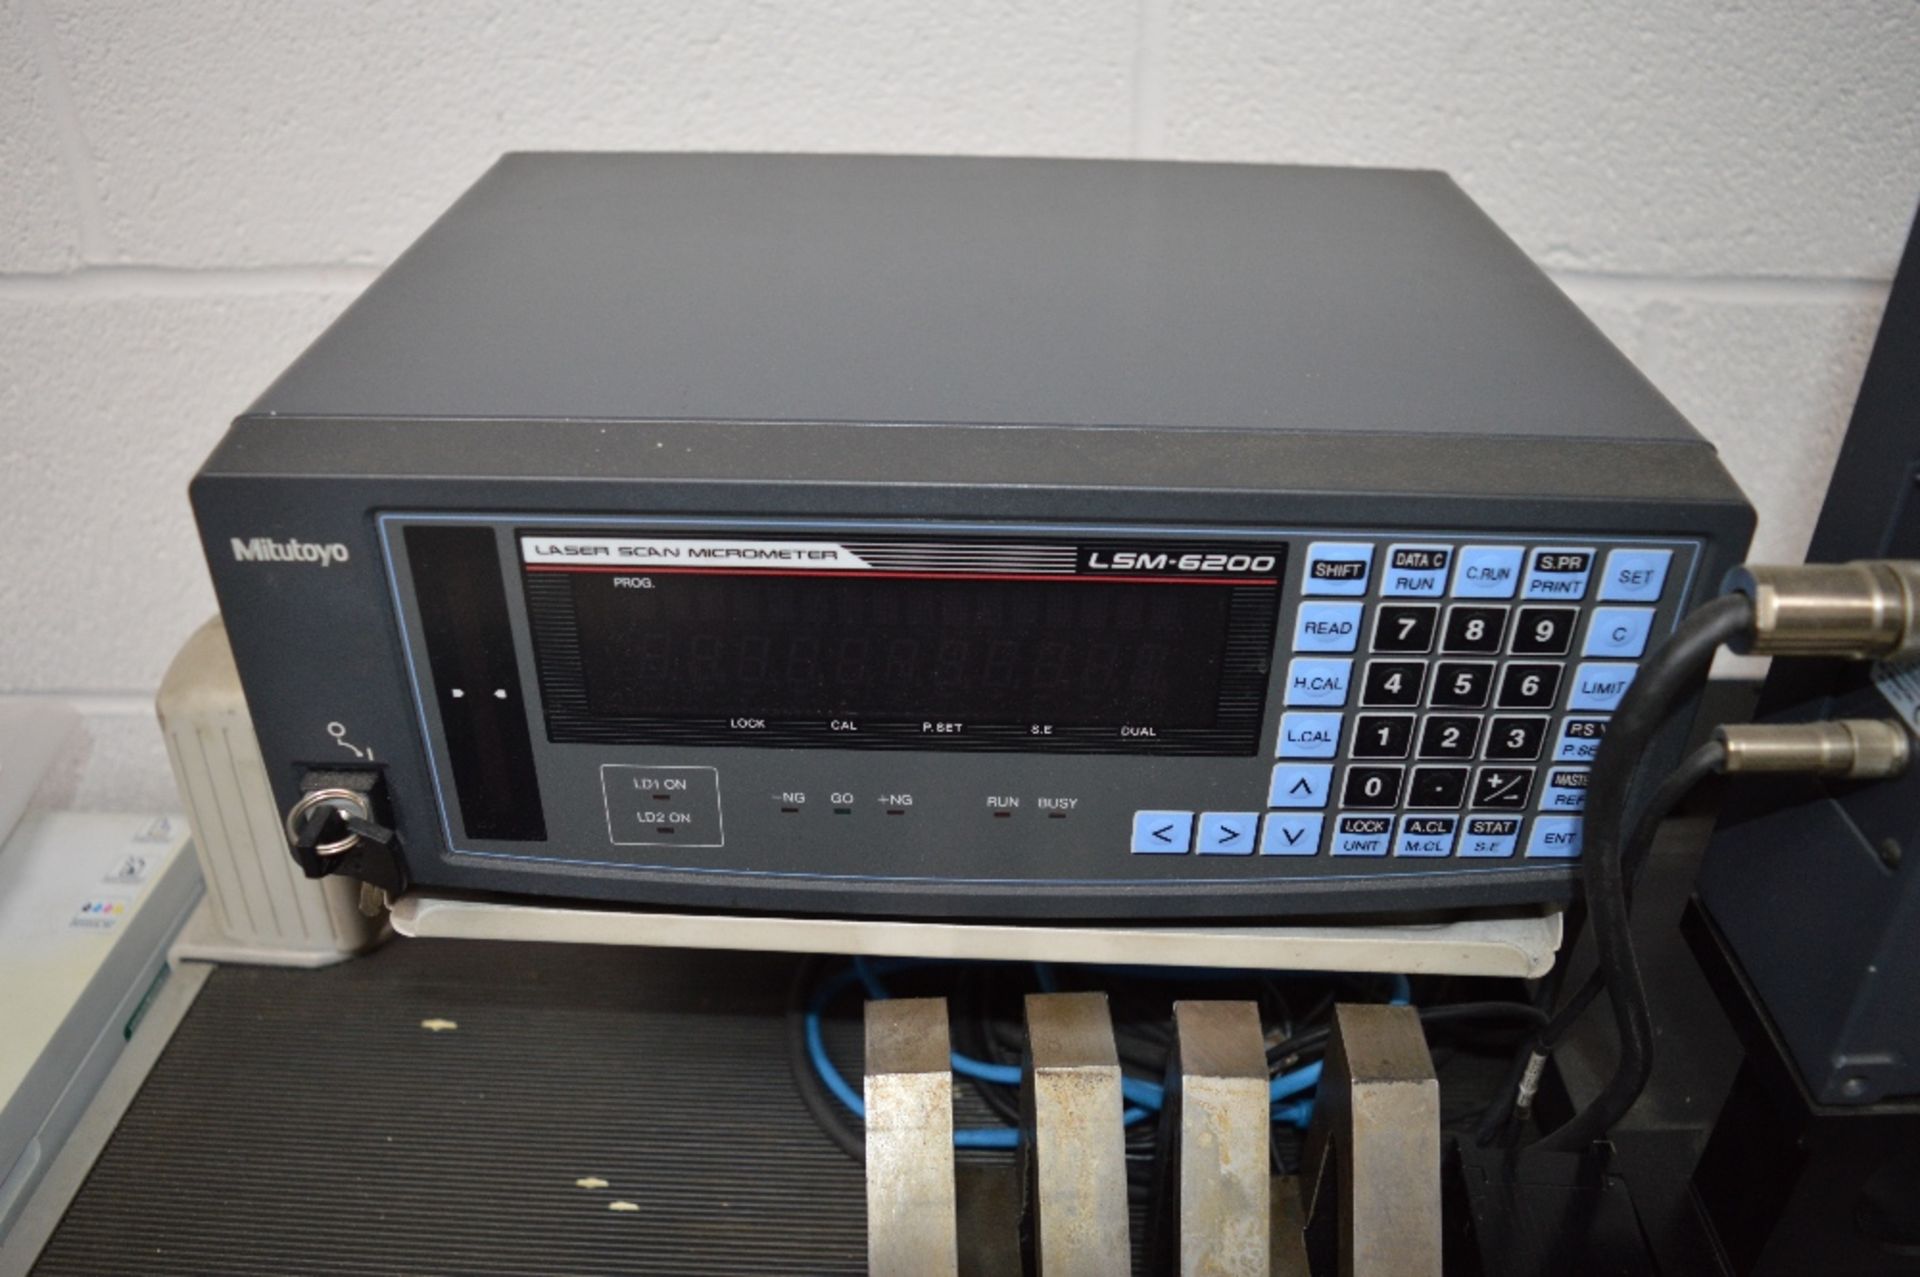 Mitutoyo LSM-516 S laser scan micrometer
Serial no - Image 3 of 5